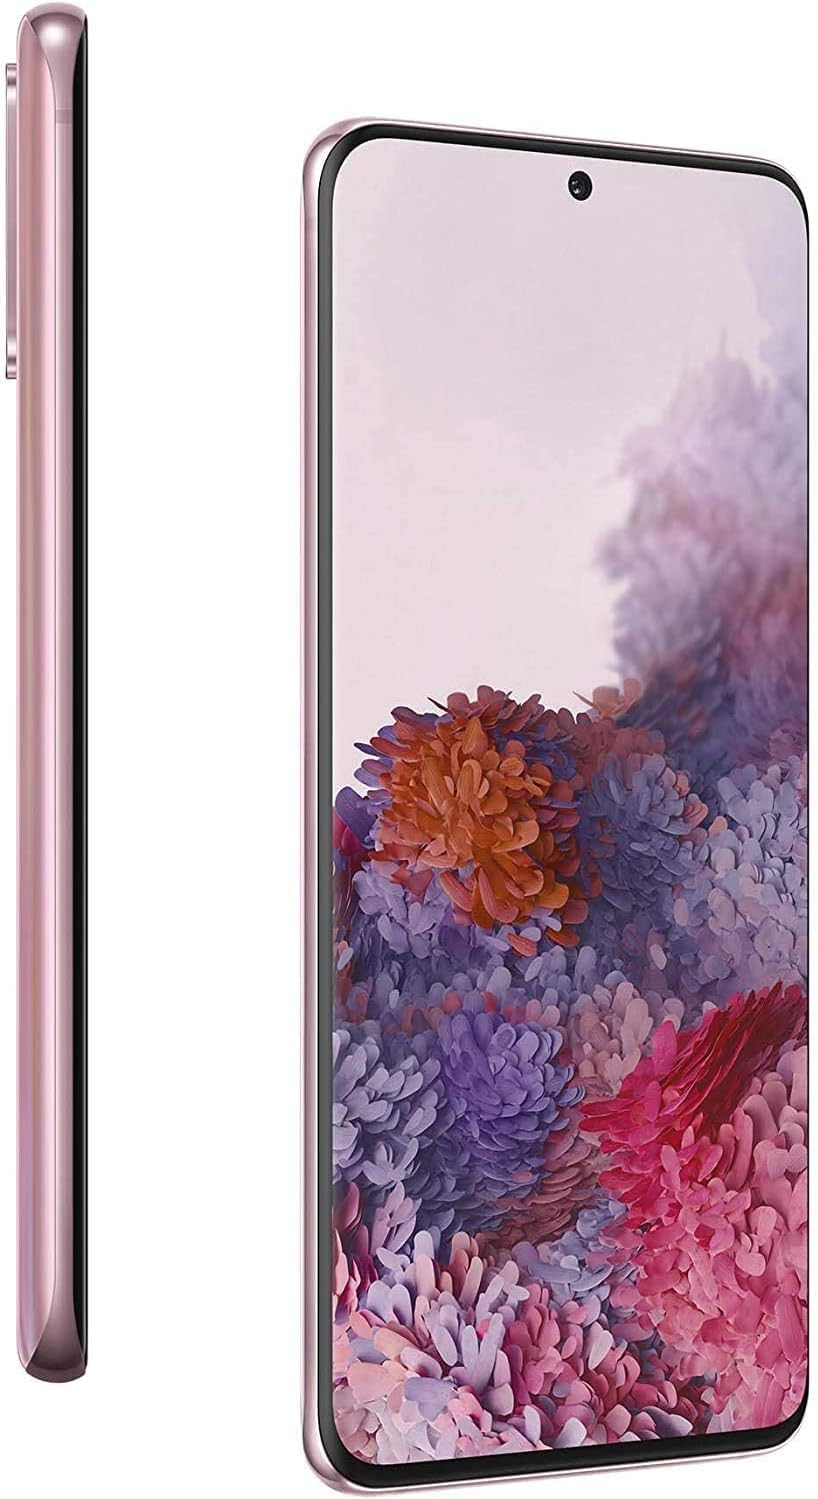 Samsung Galaxy S20 5G - 128GB (Unlocked) - Cloud Pink (Pre-Owned)